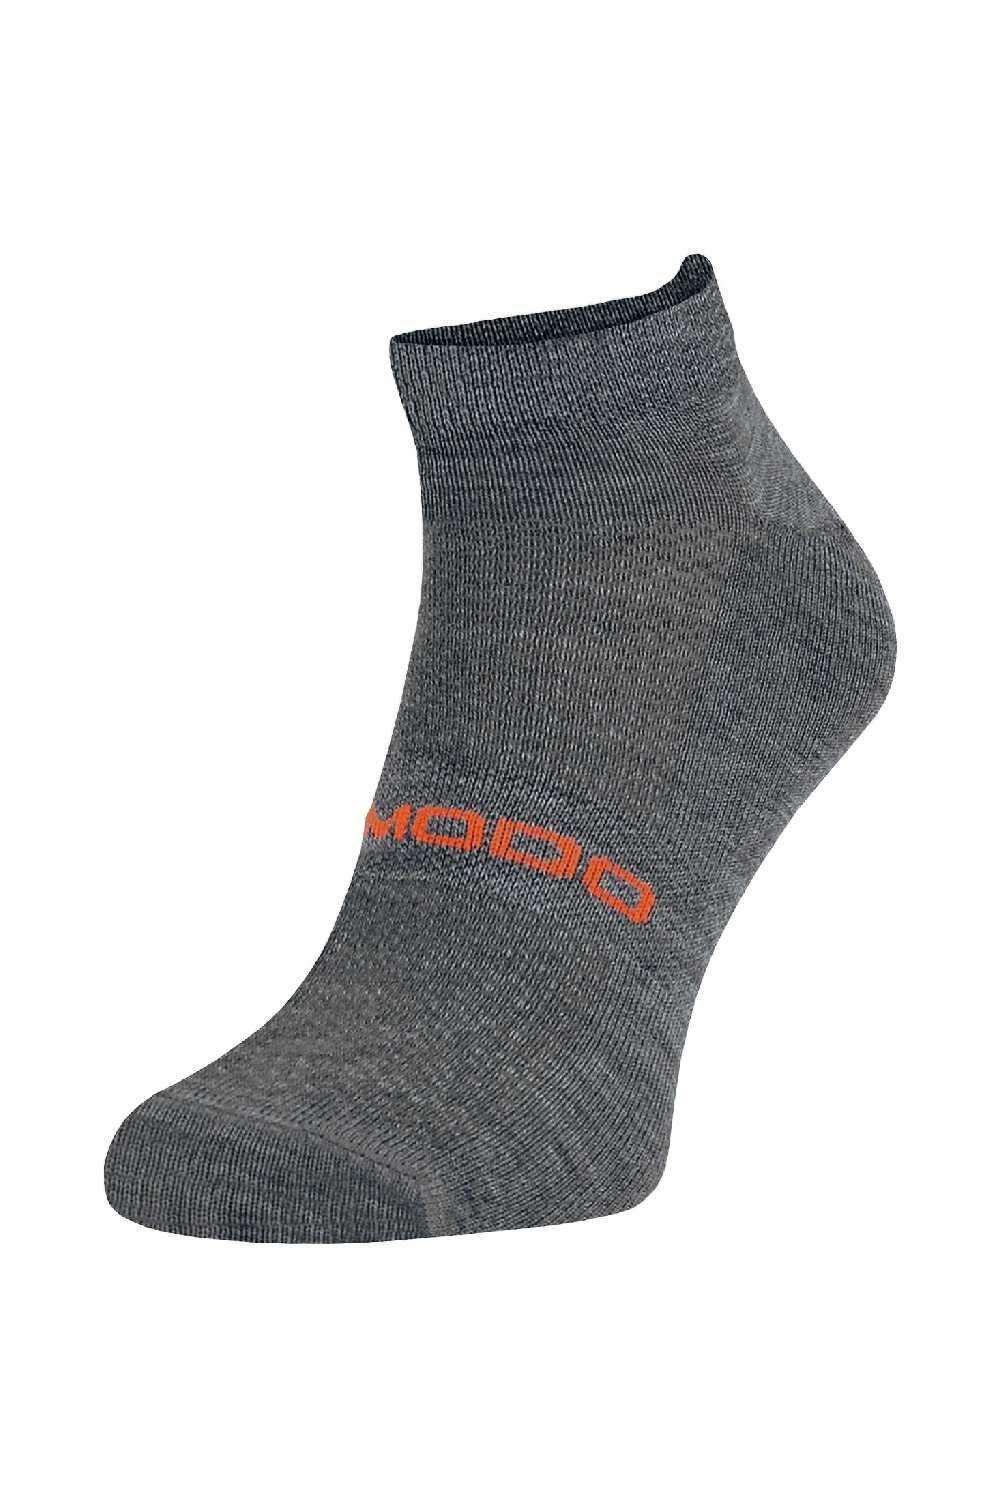 Merino Wool Running Socks - Lightweight Cushioned Sport Socks